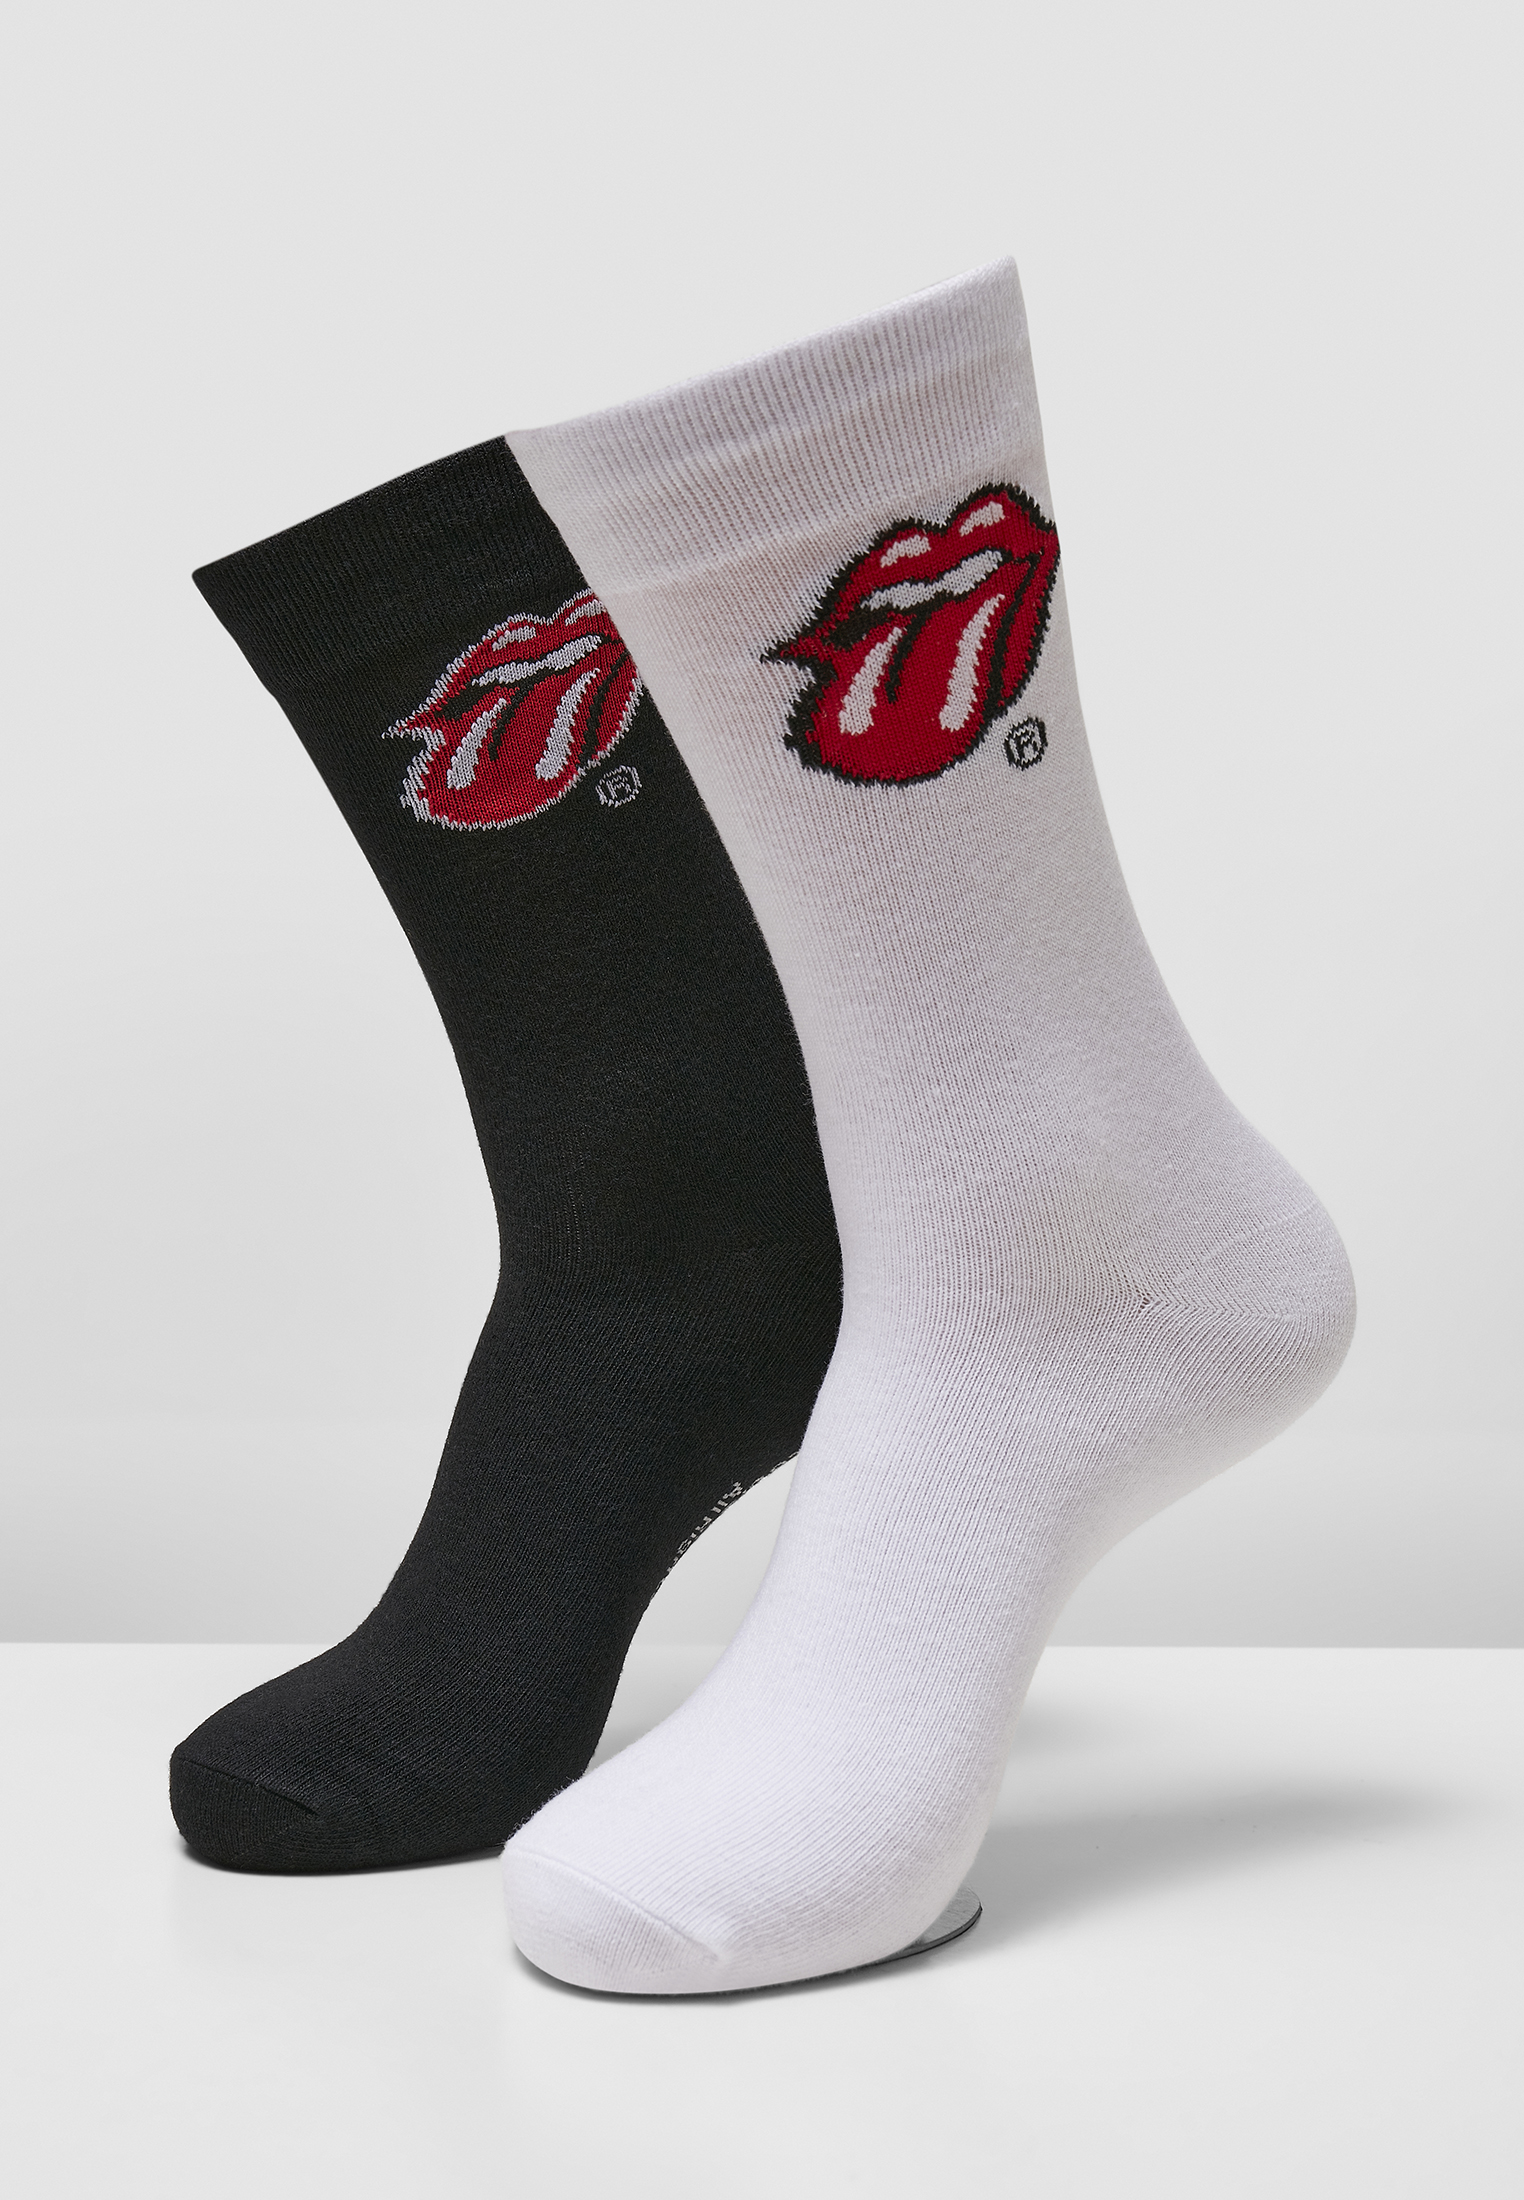 Socken Rolling Stones Tongue Socks 2-Pack in Farbe black/white